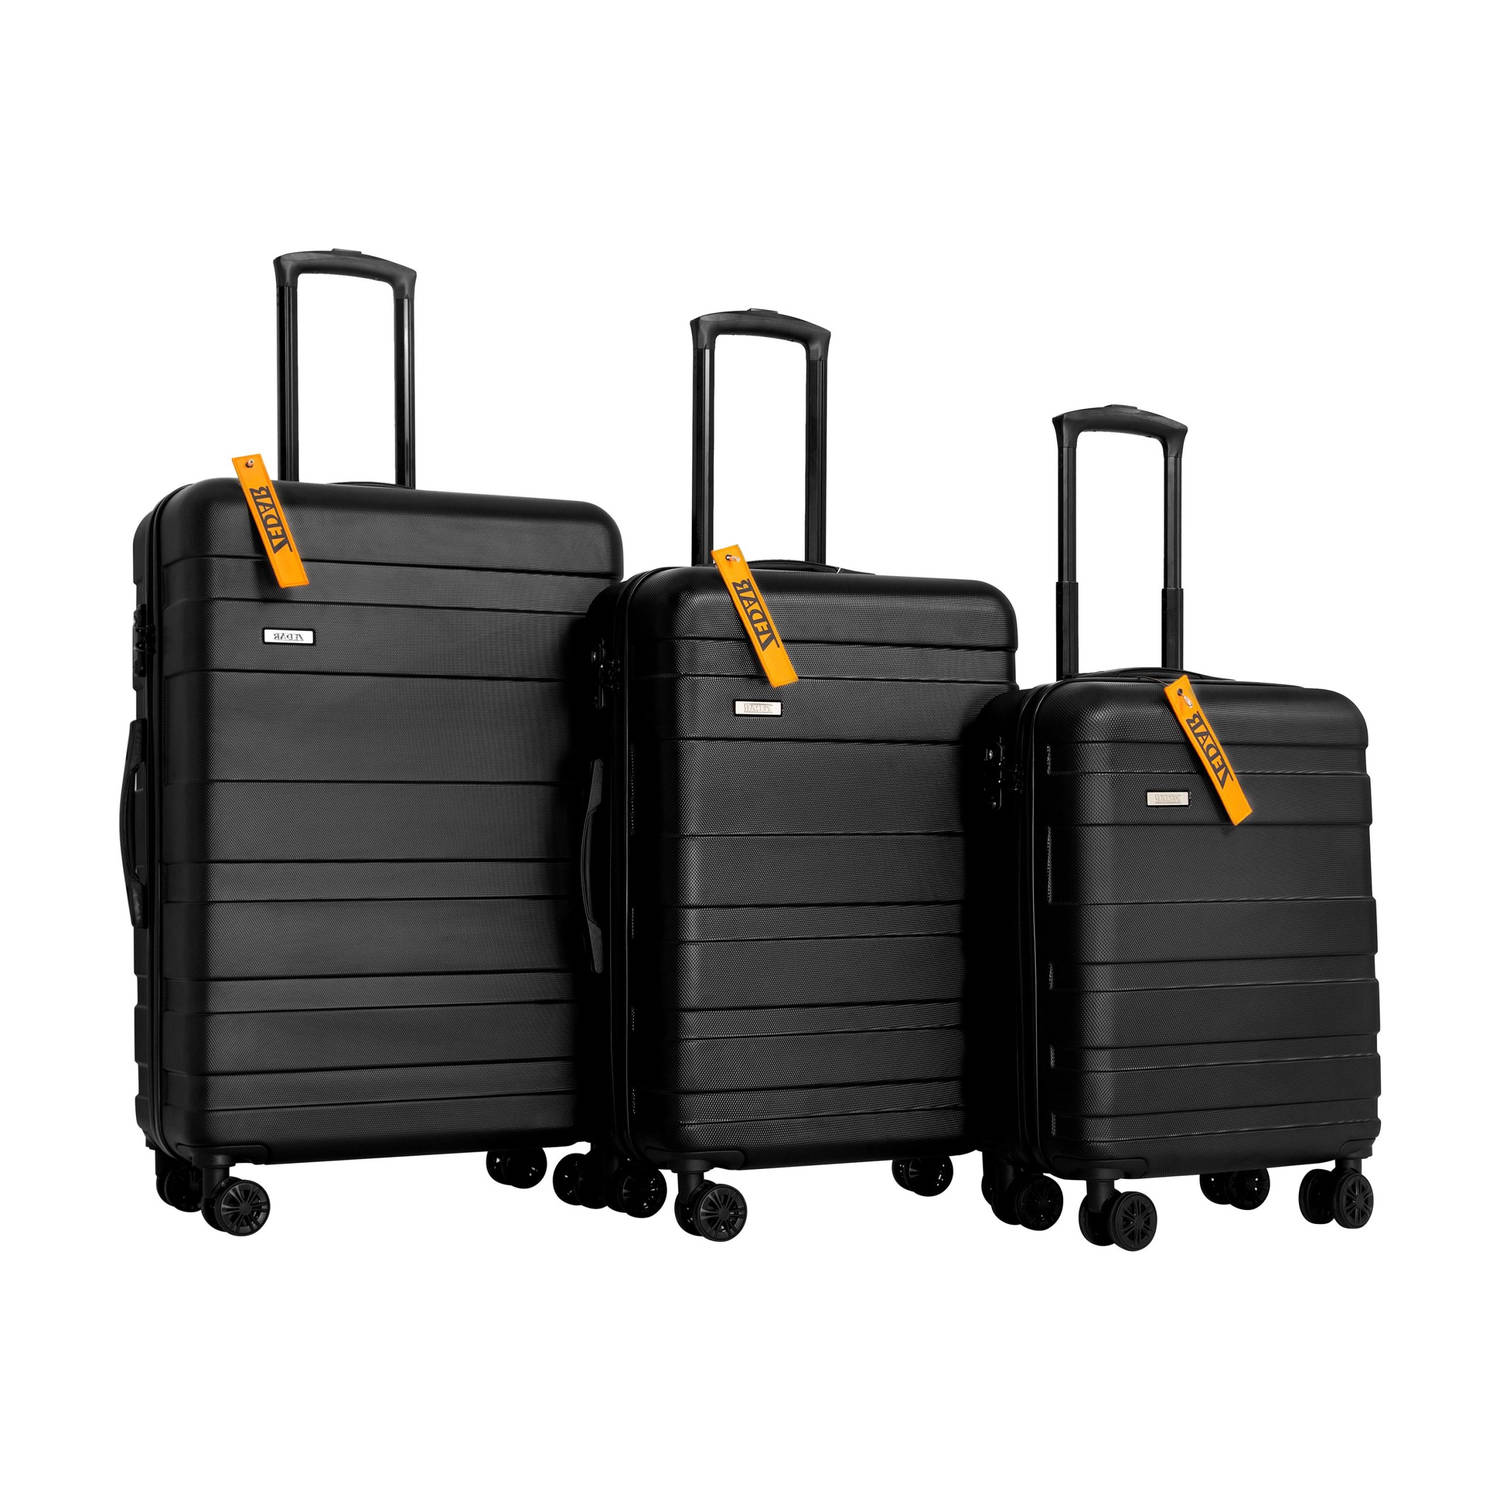 Zedar K600 Kofferset - Trolleyset 3-delig met TSA slot - handbagage en groot - Zwart aanbieding